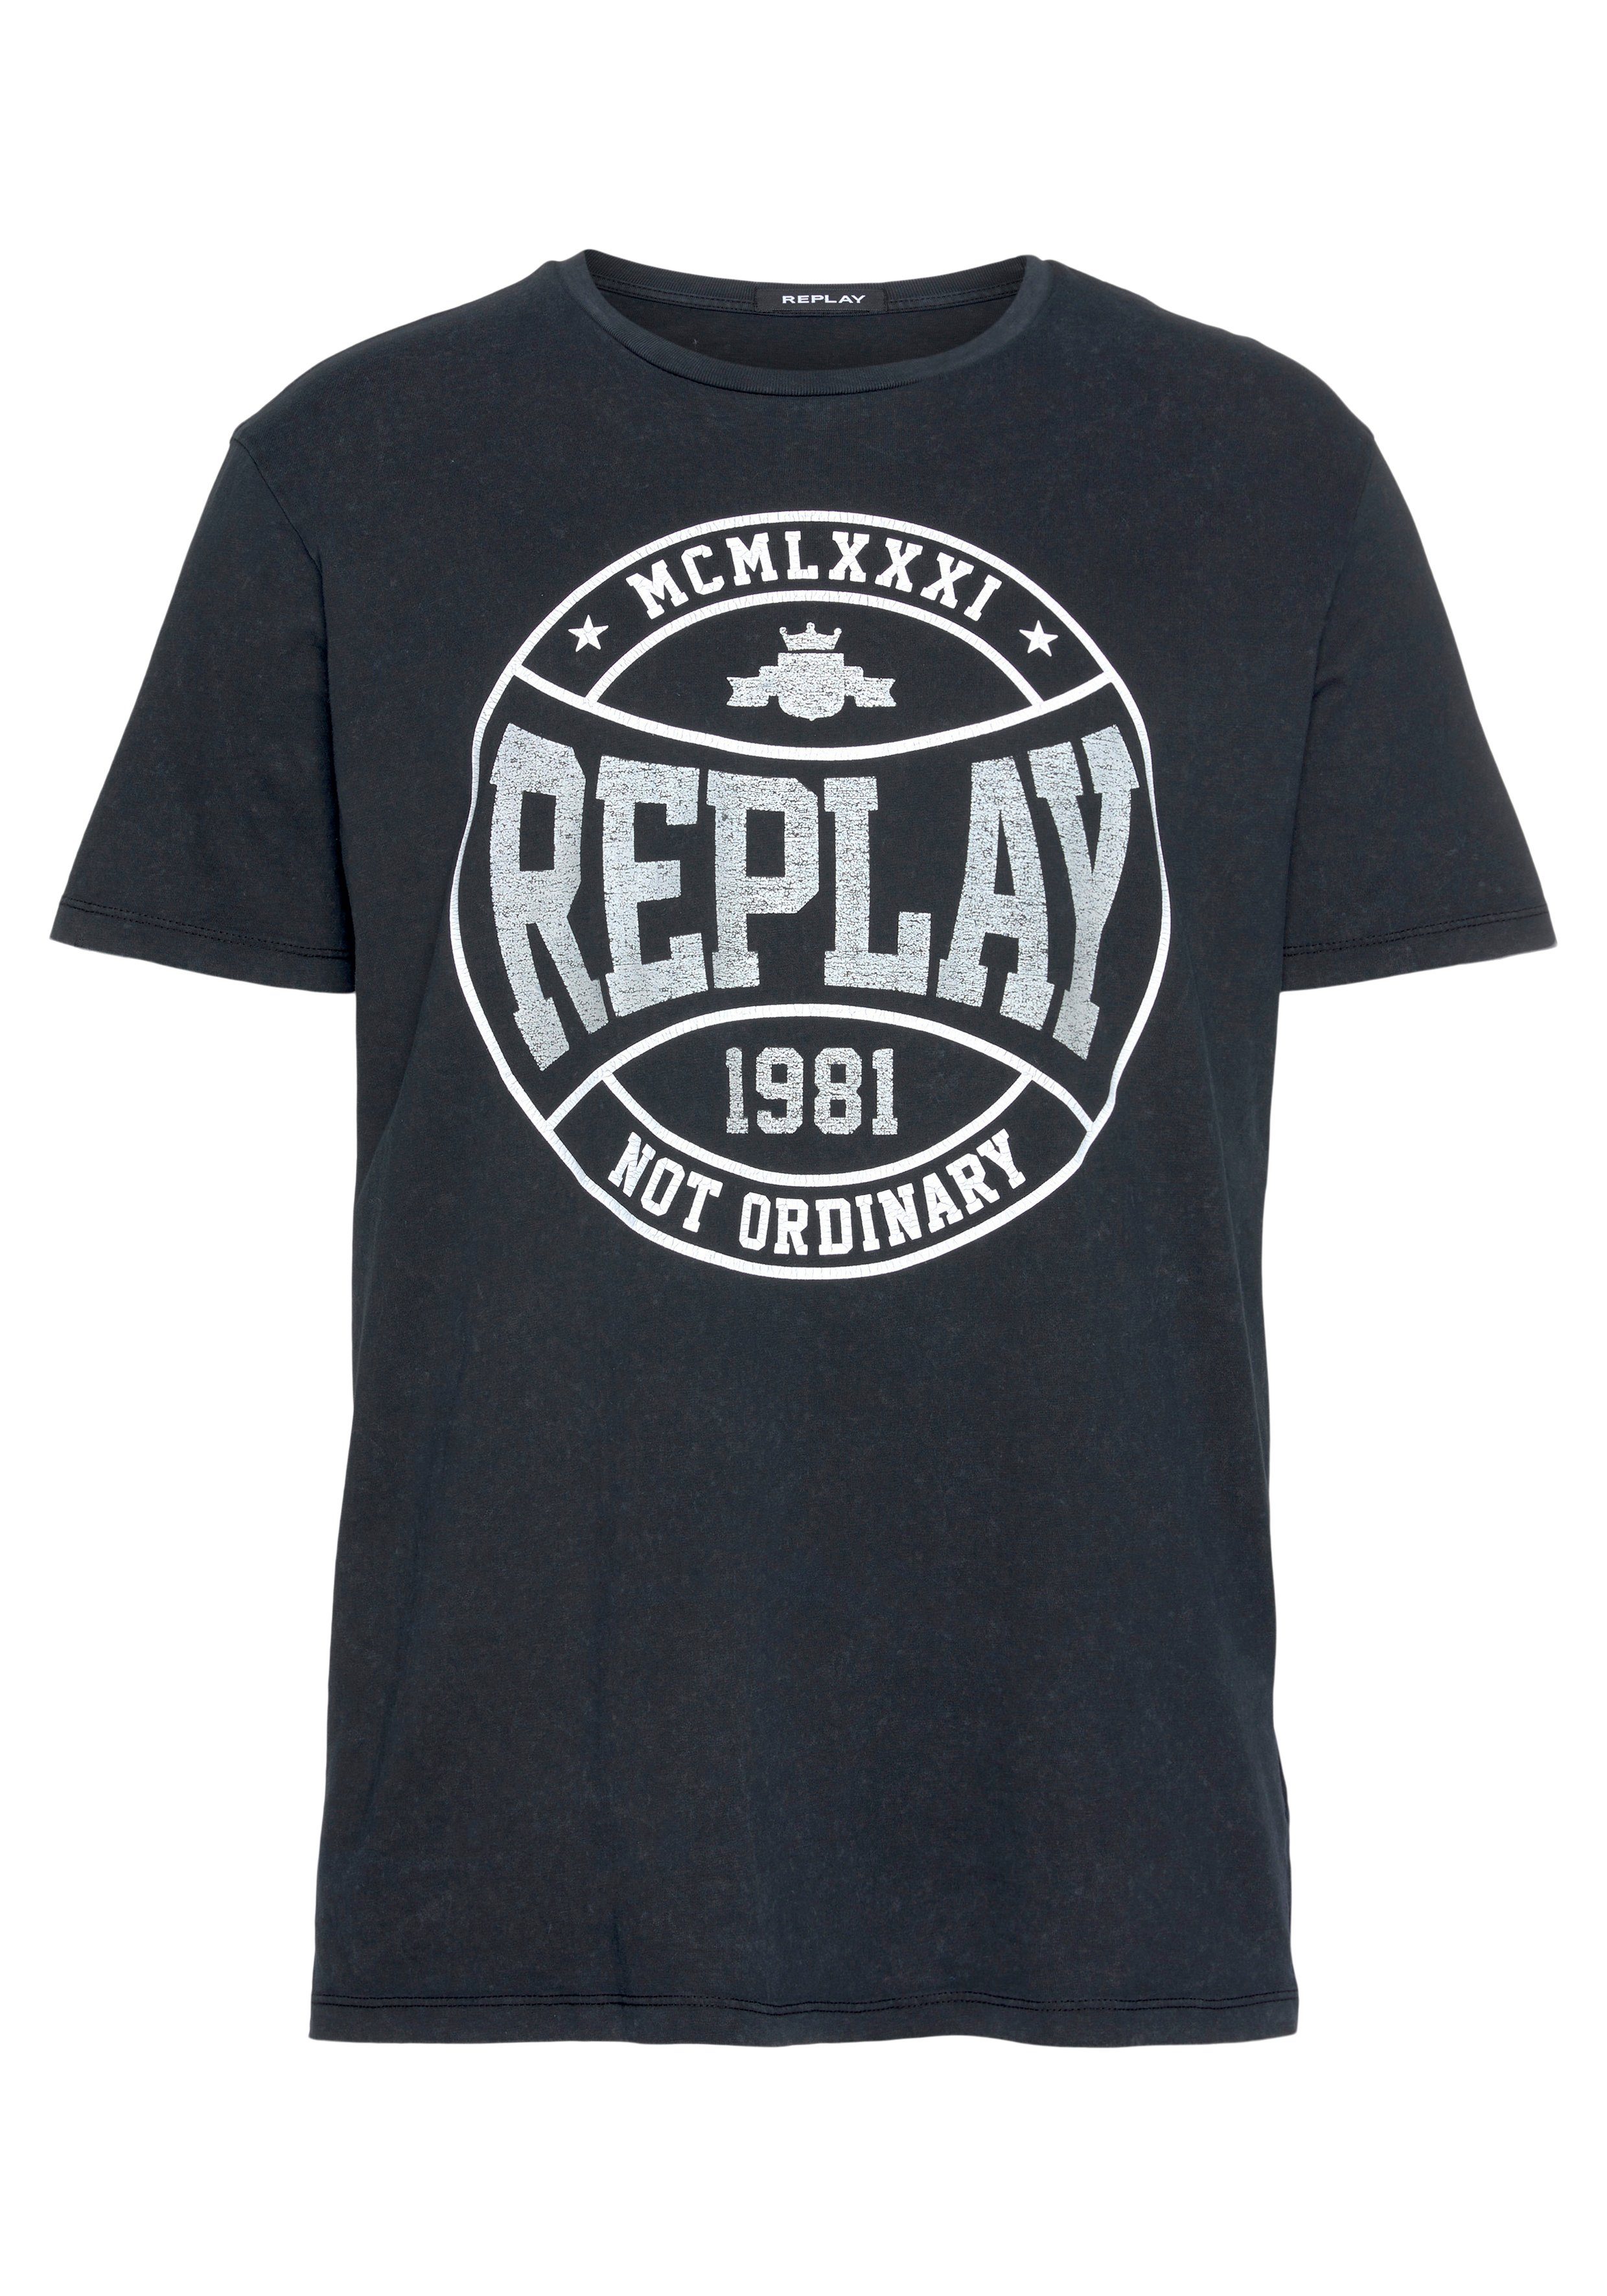 Replay T-Shirt in washed-Optik dunkelgrau